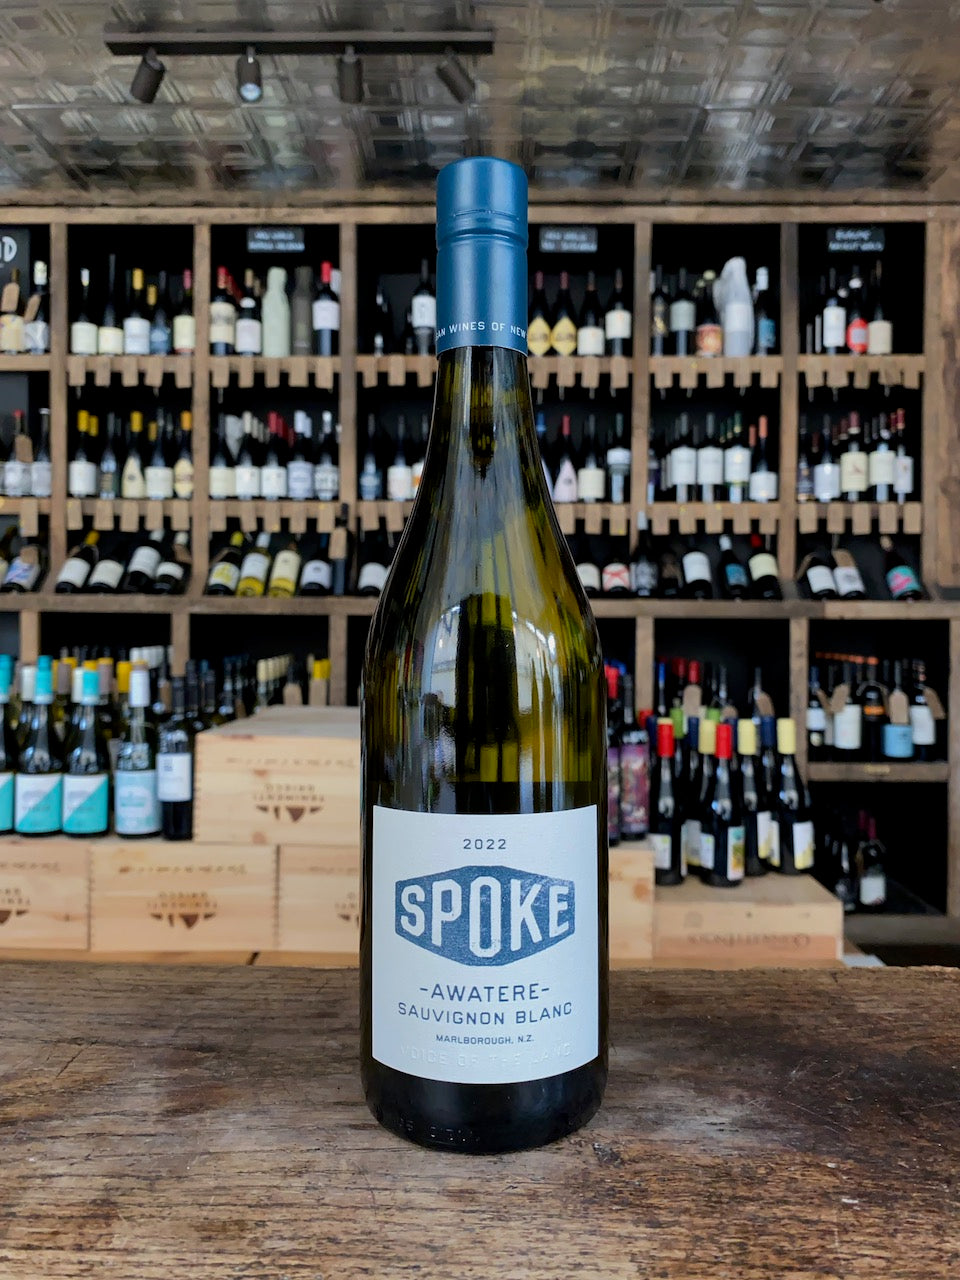 Awatere Sauvignon Blanc 2022, Spoke Wines, Marlborough